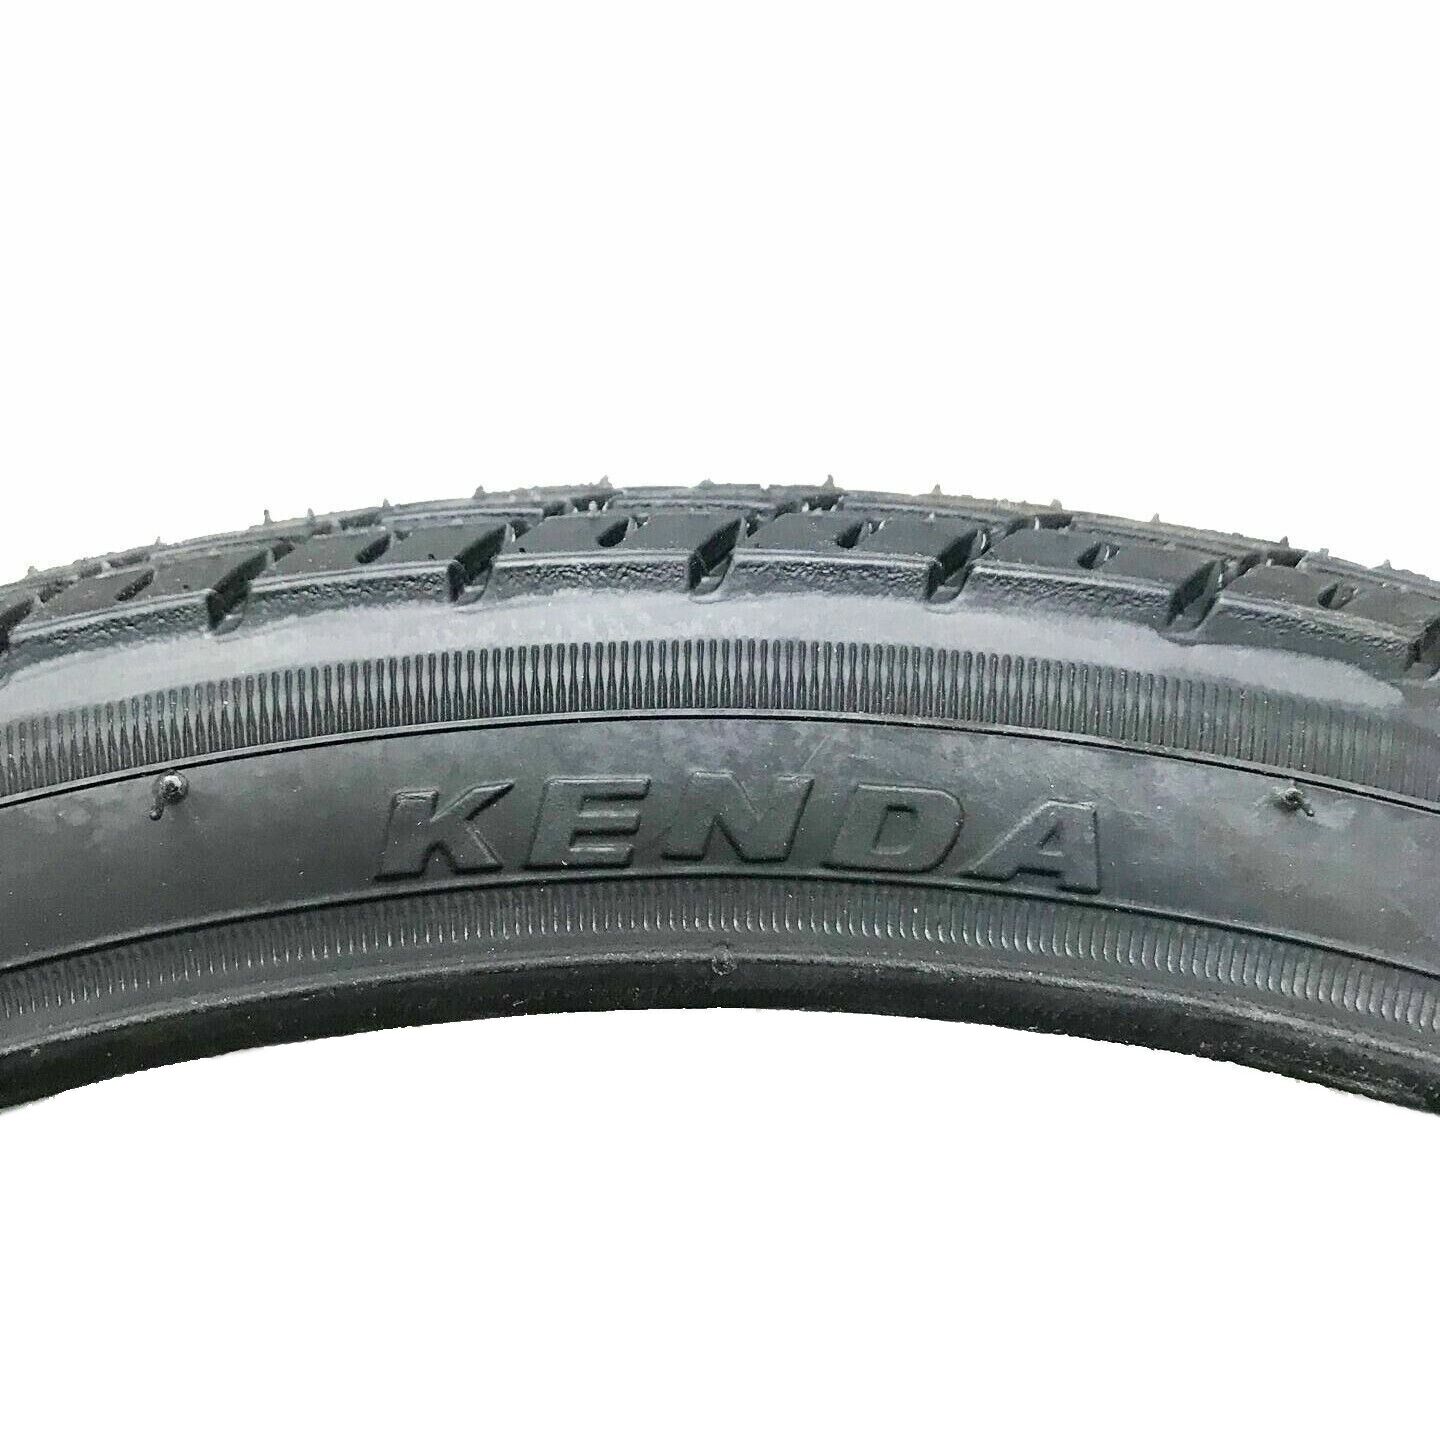 Kenda Tyre 20x1.75 Bicycle Tyre 47-406 Folding Bike 20" Tire